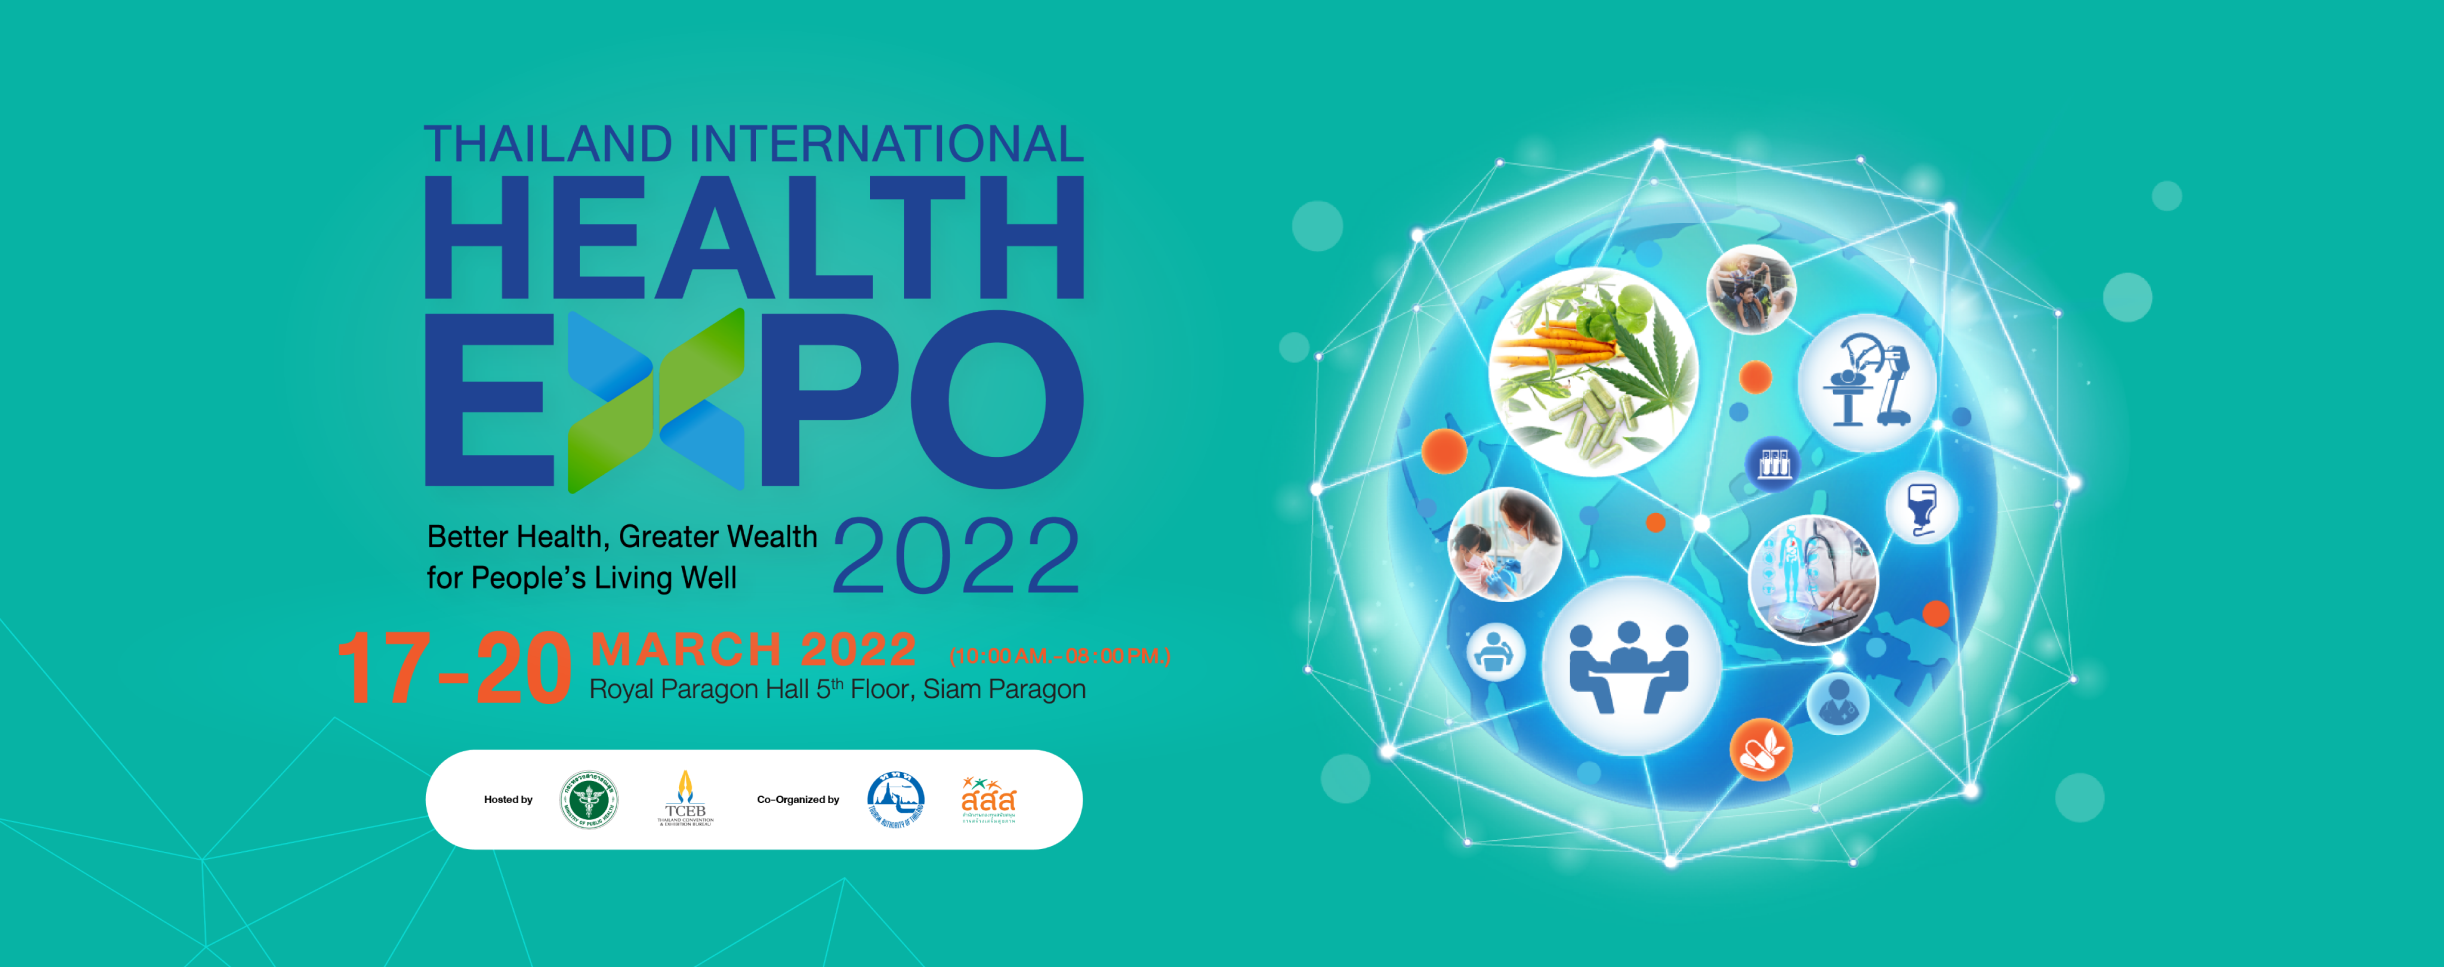 Thailand_International_Health_Expo_2022